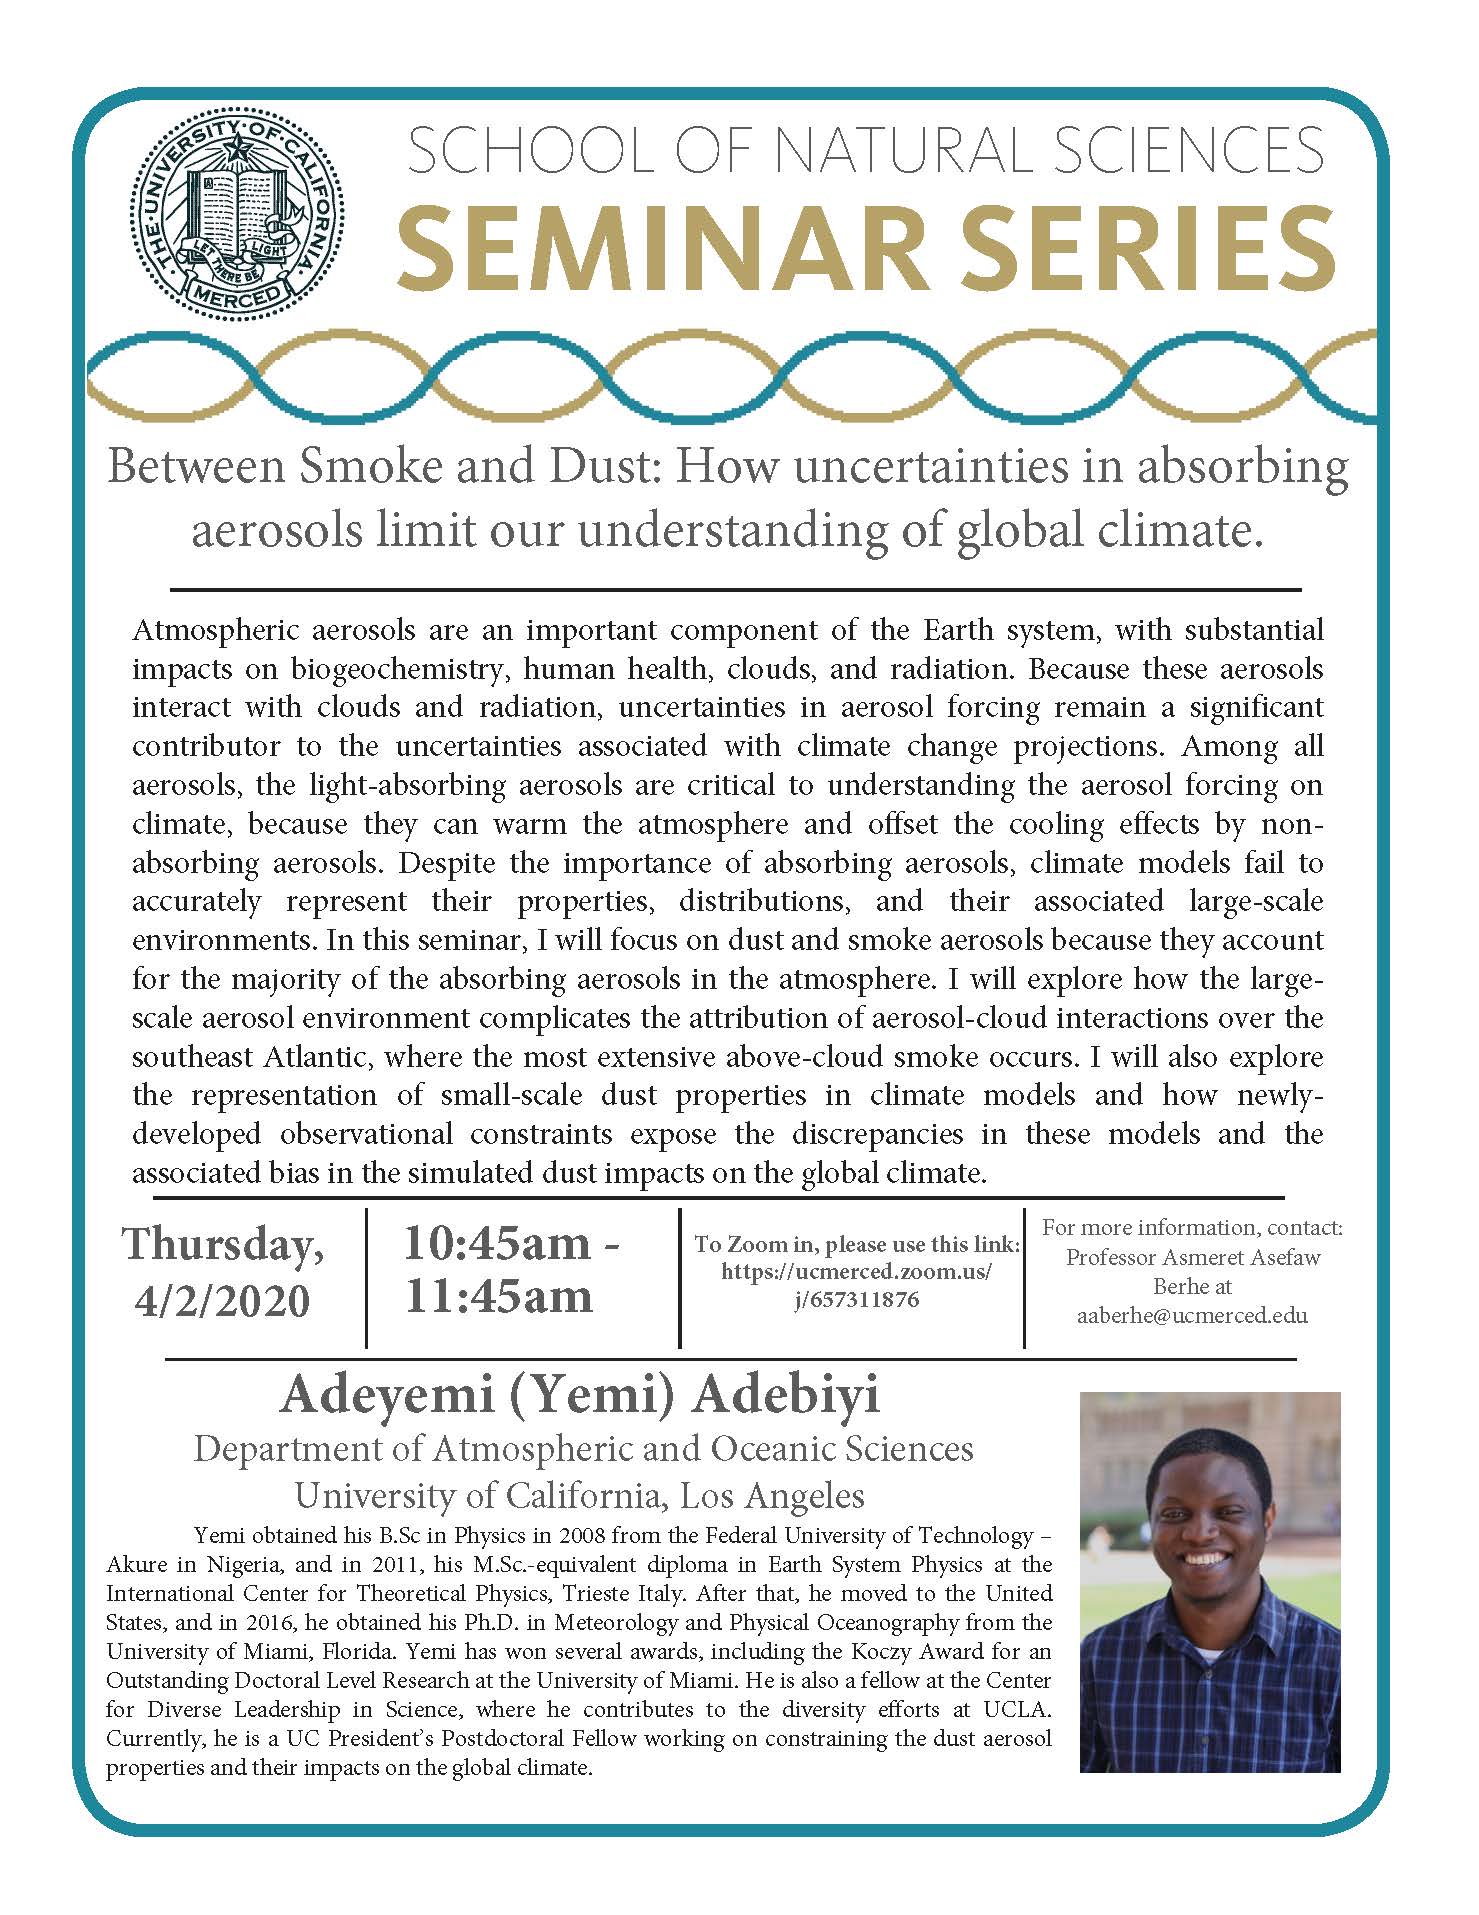 LES Seminar for Dr. Adeyemi Adebiyi